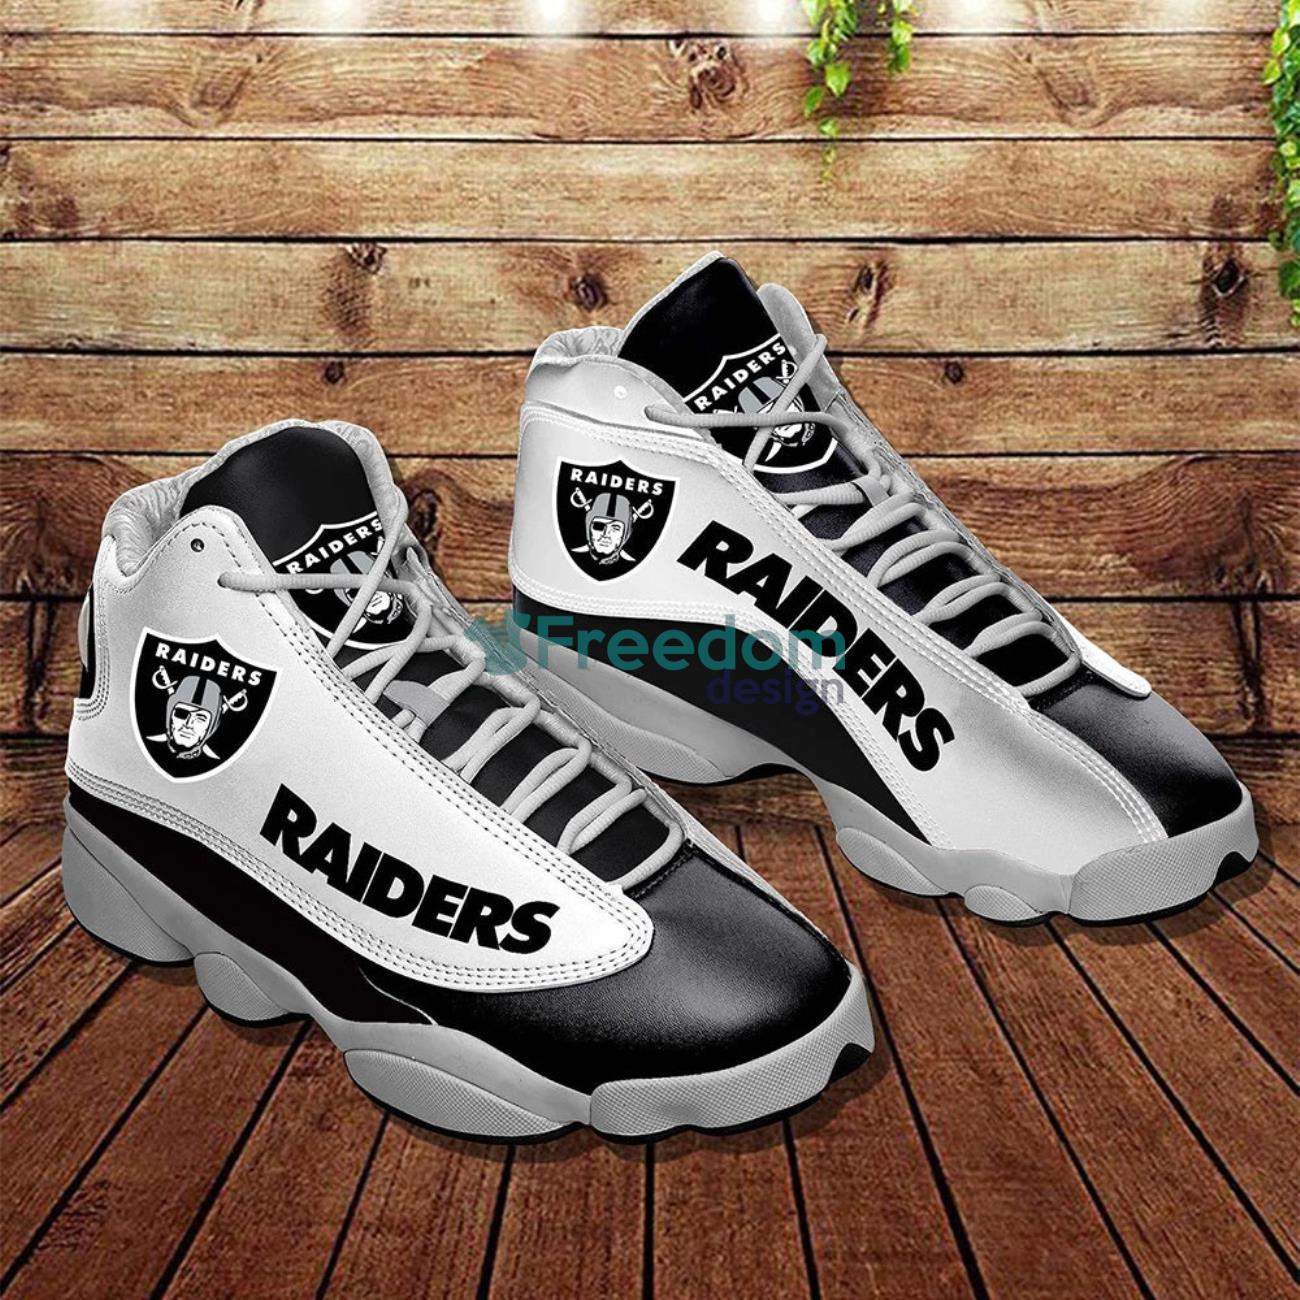 Las Vegas Raiders Team Air Jordan 13 Sneaker Shoes For Fans Gift